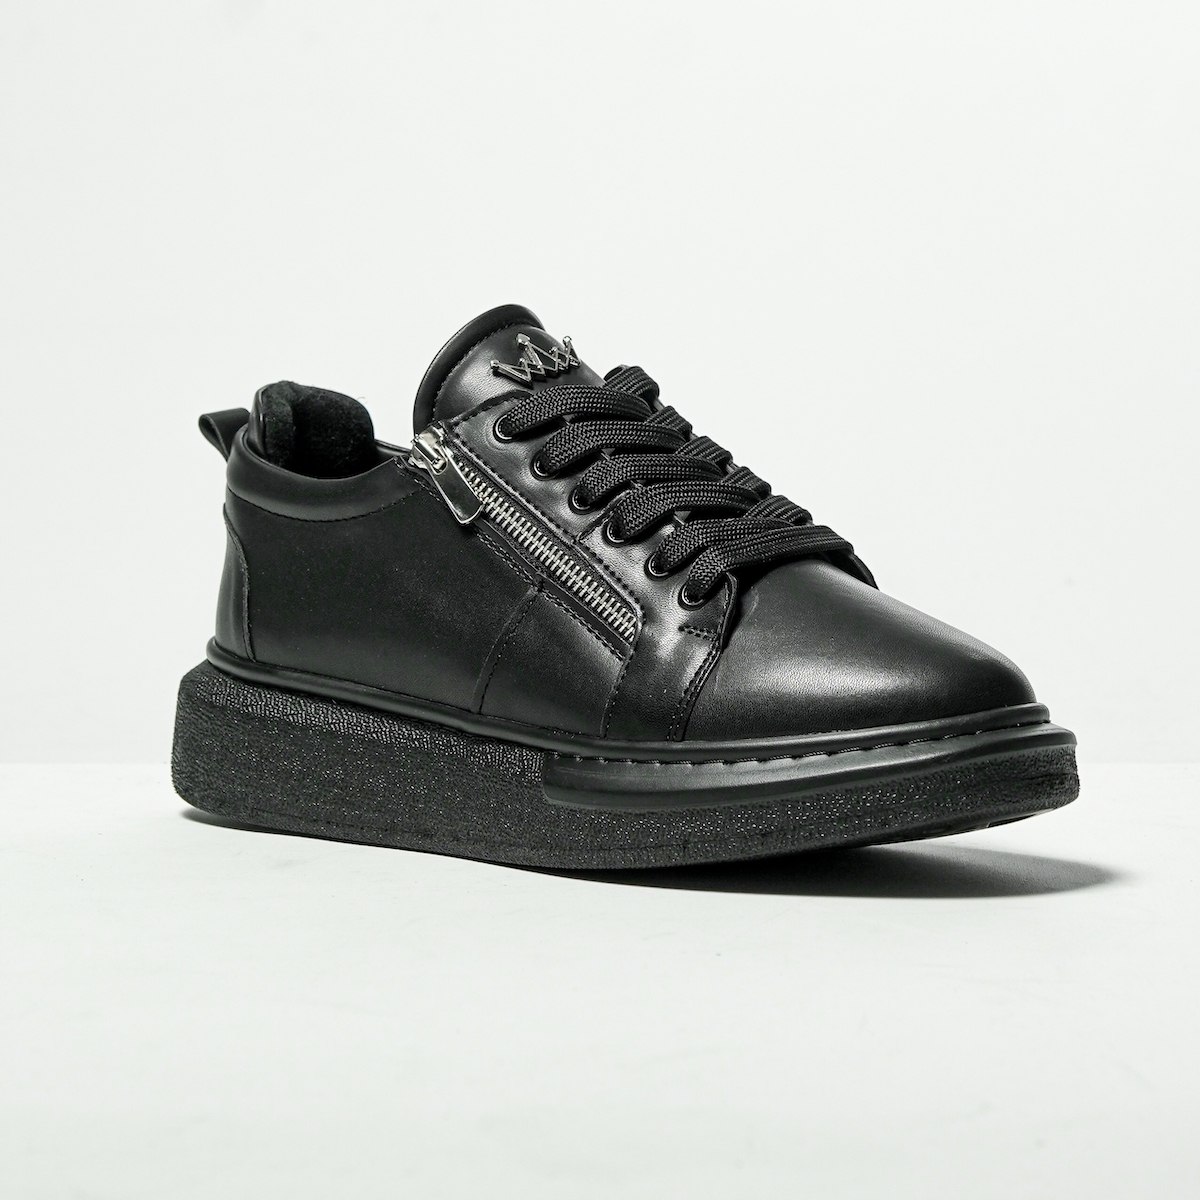 Hype Sole Zipped Style Sneakers in Black | Martin Valen